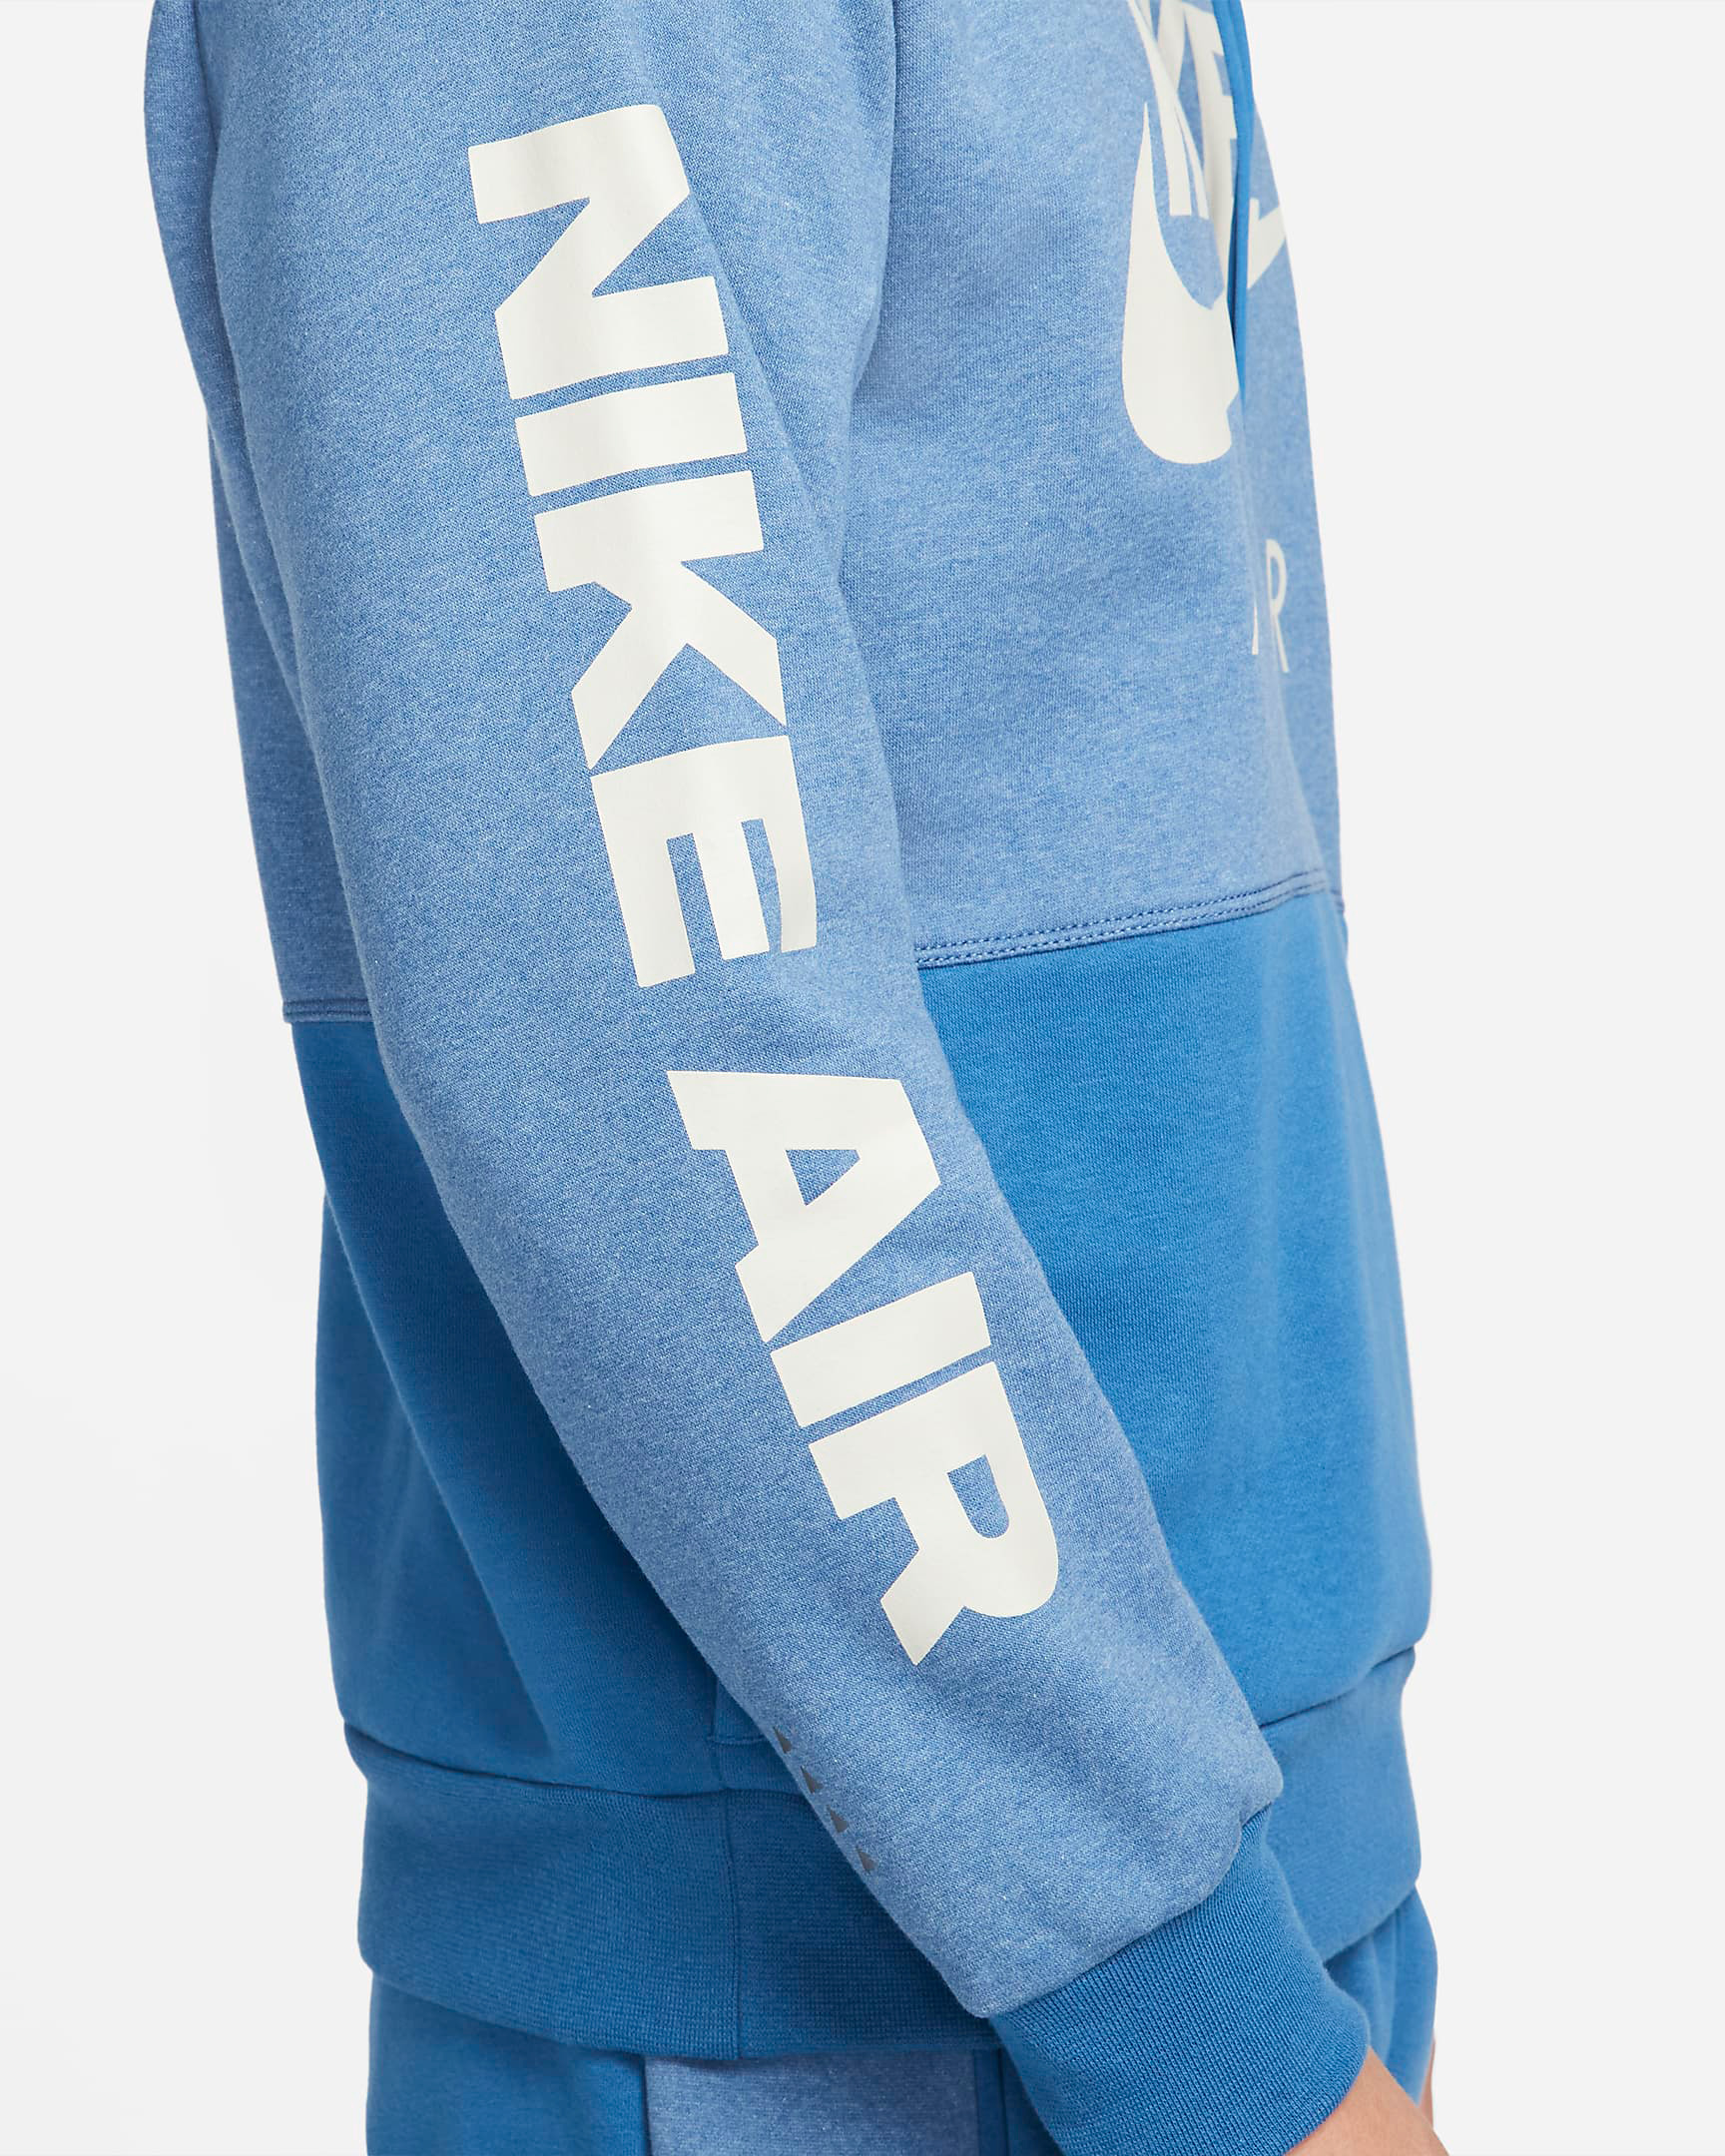 nike-air-hoodie-dark-marina-blue-university-blue-4